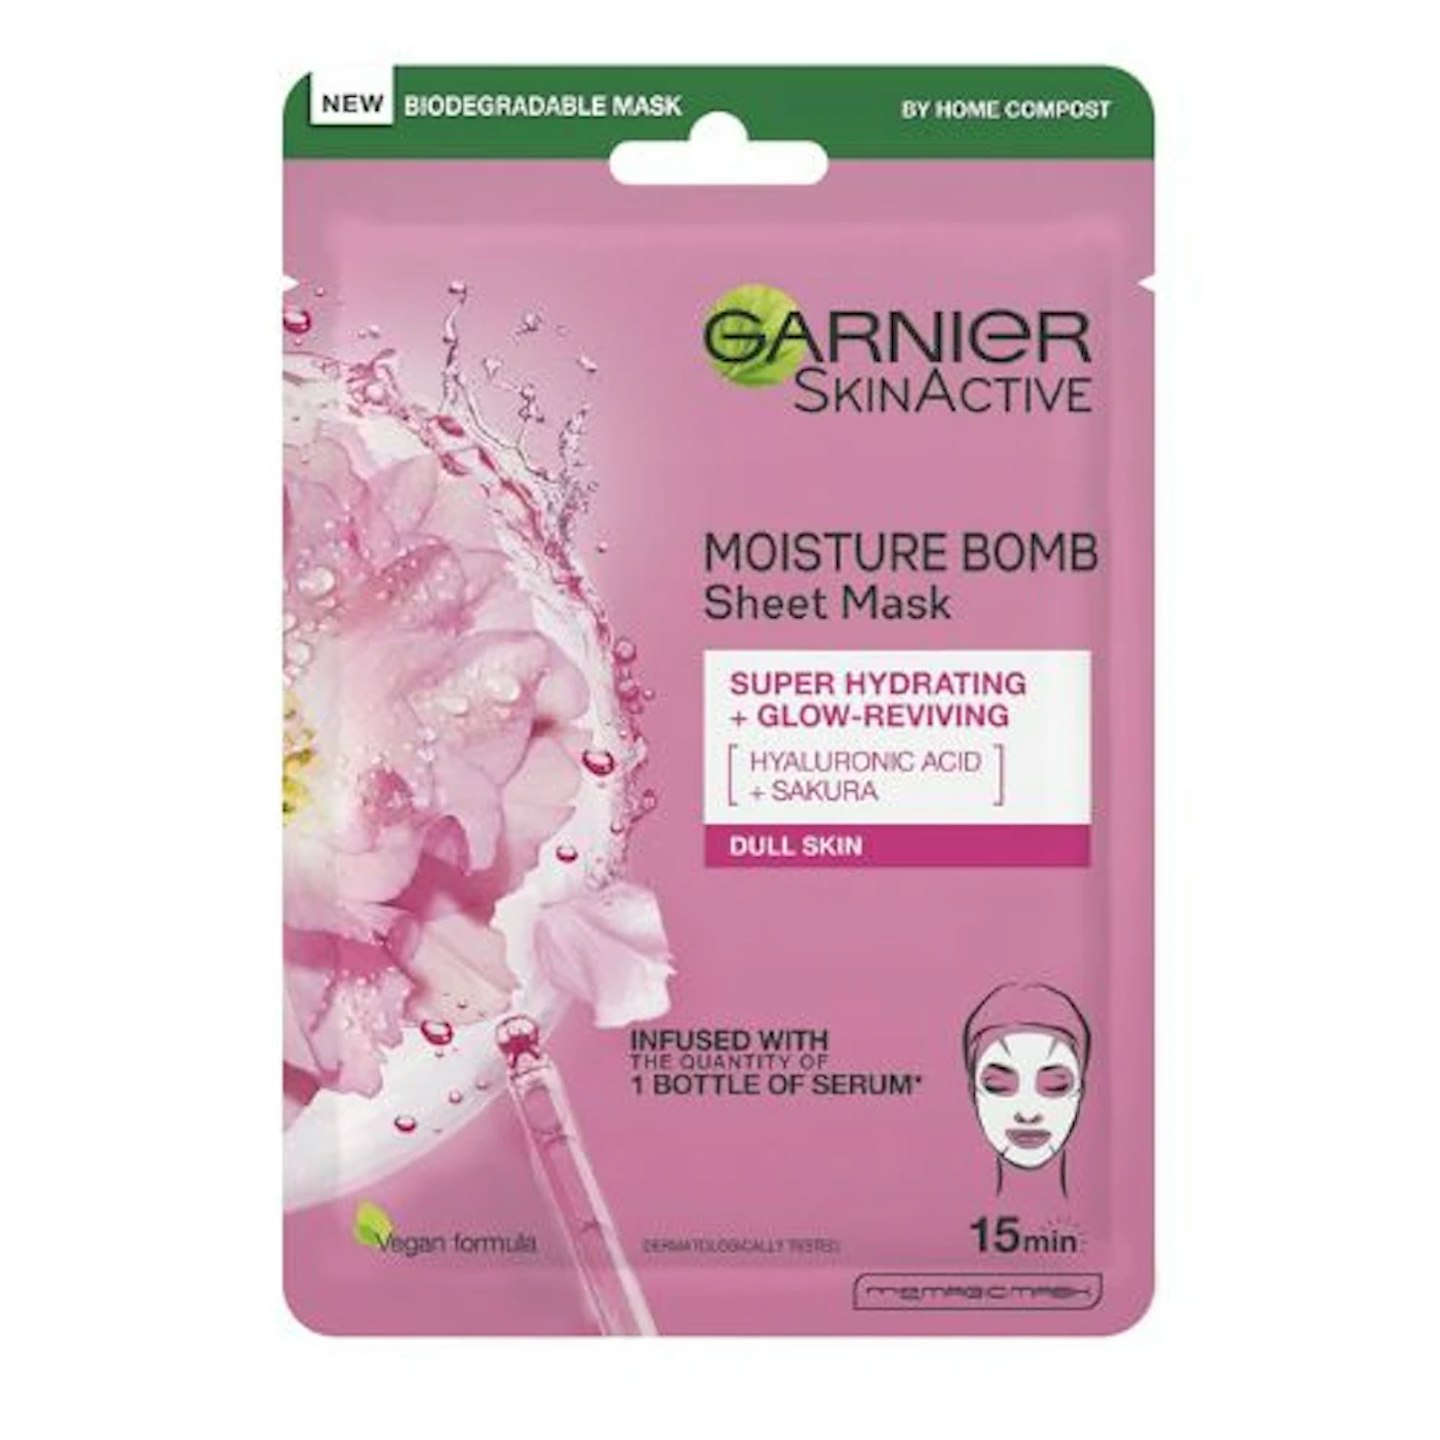 Garnier Moisture Bomb Tissue Mask